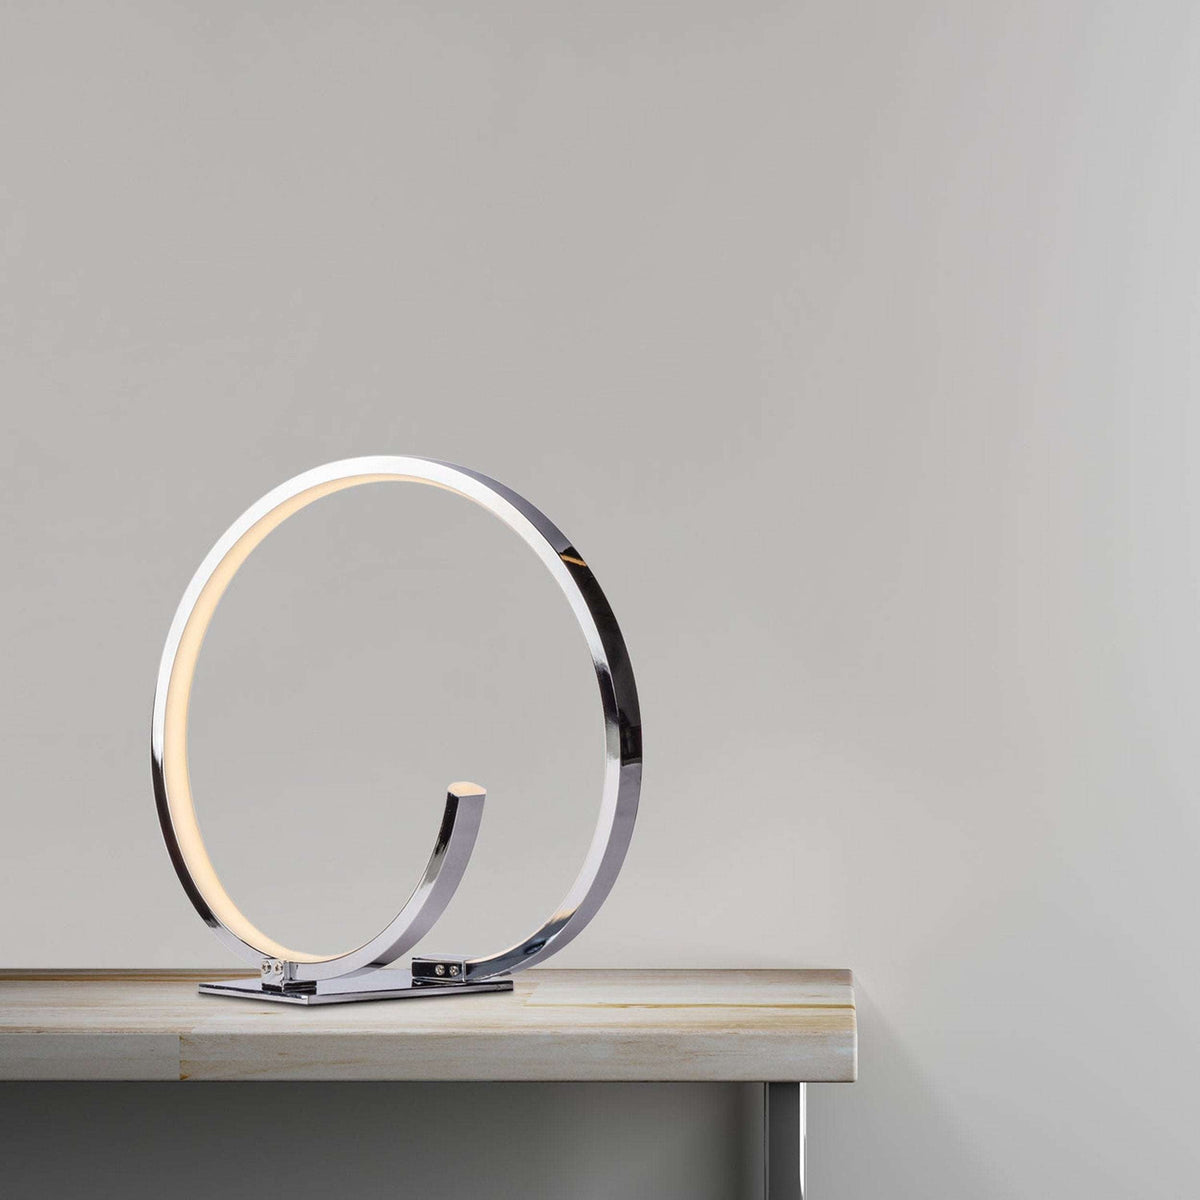 Circular Design Modern Table Lamp